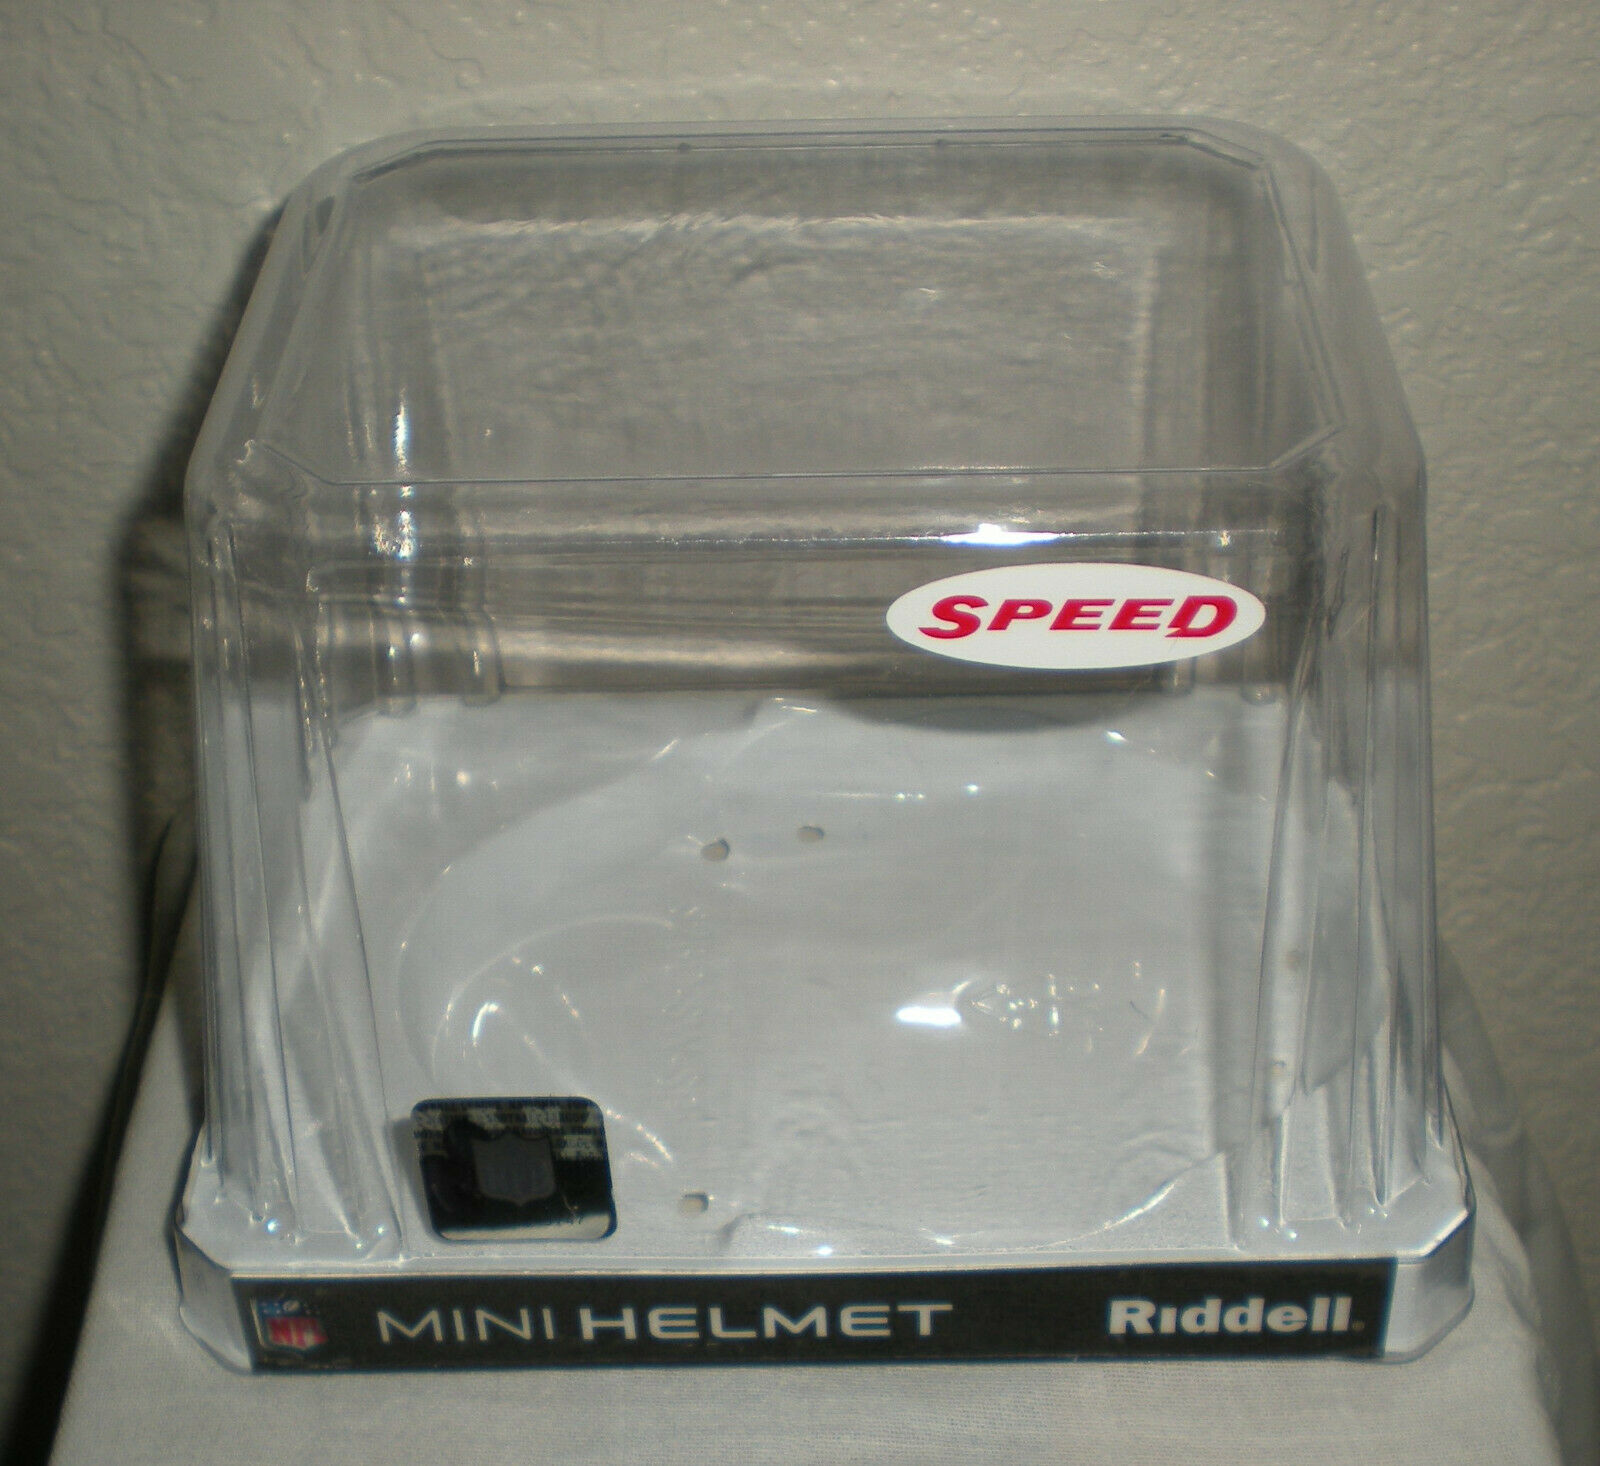 Riddell Speed Ncaa / Nfl Mini Helmet  Display Case / Container Empty Box